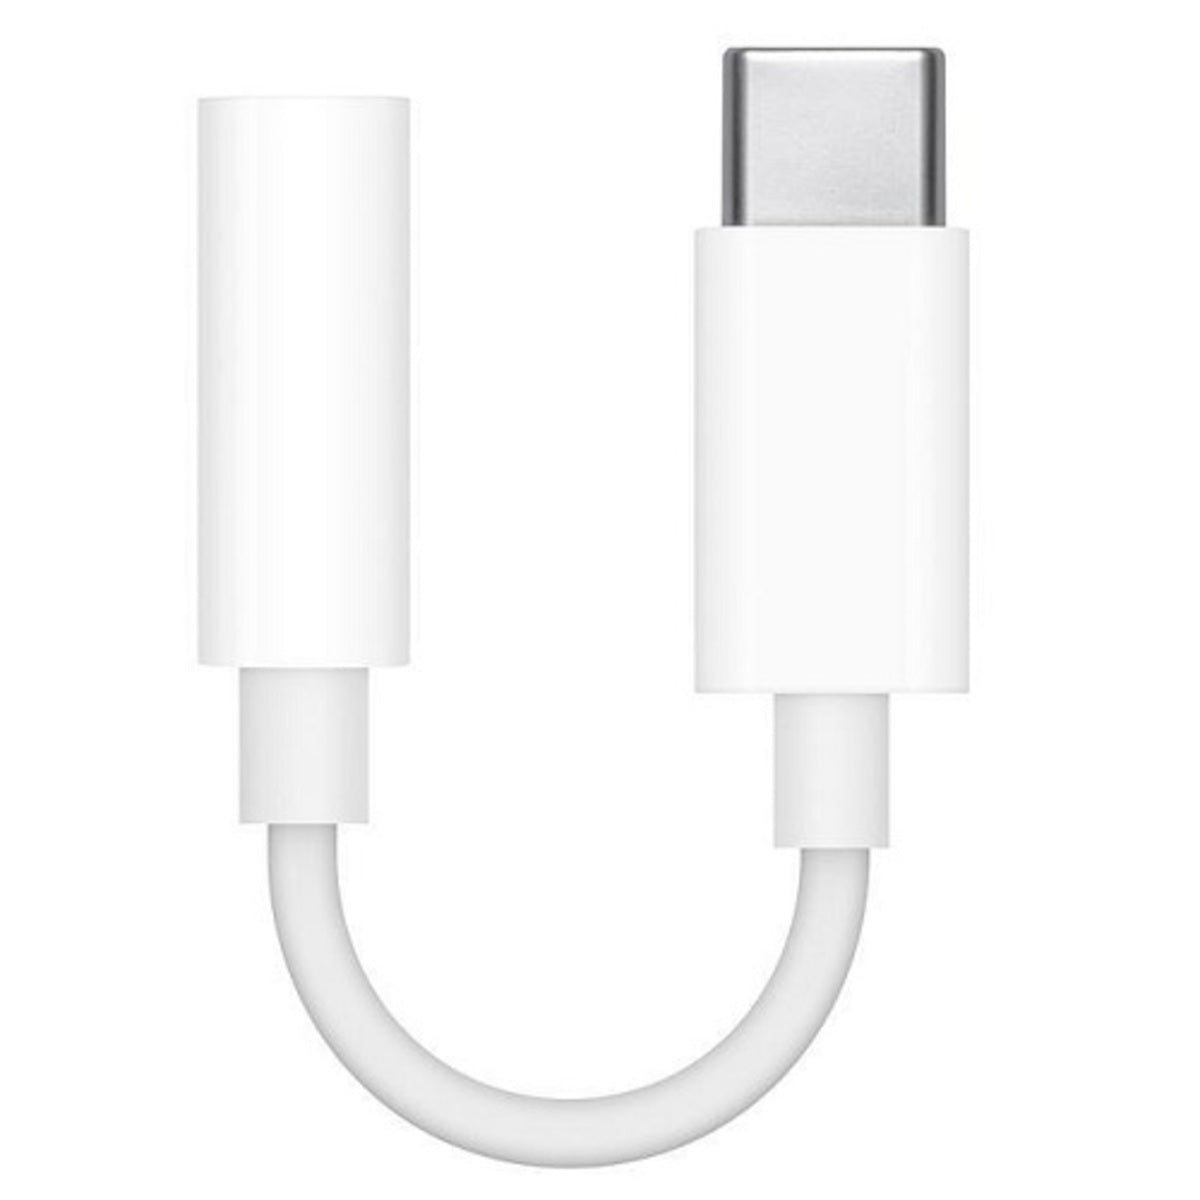 Apple Usb-C To 3.5mm Headphone Jack Adapter